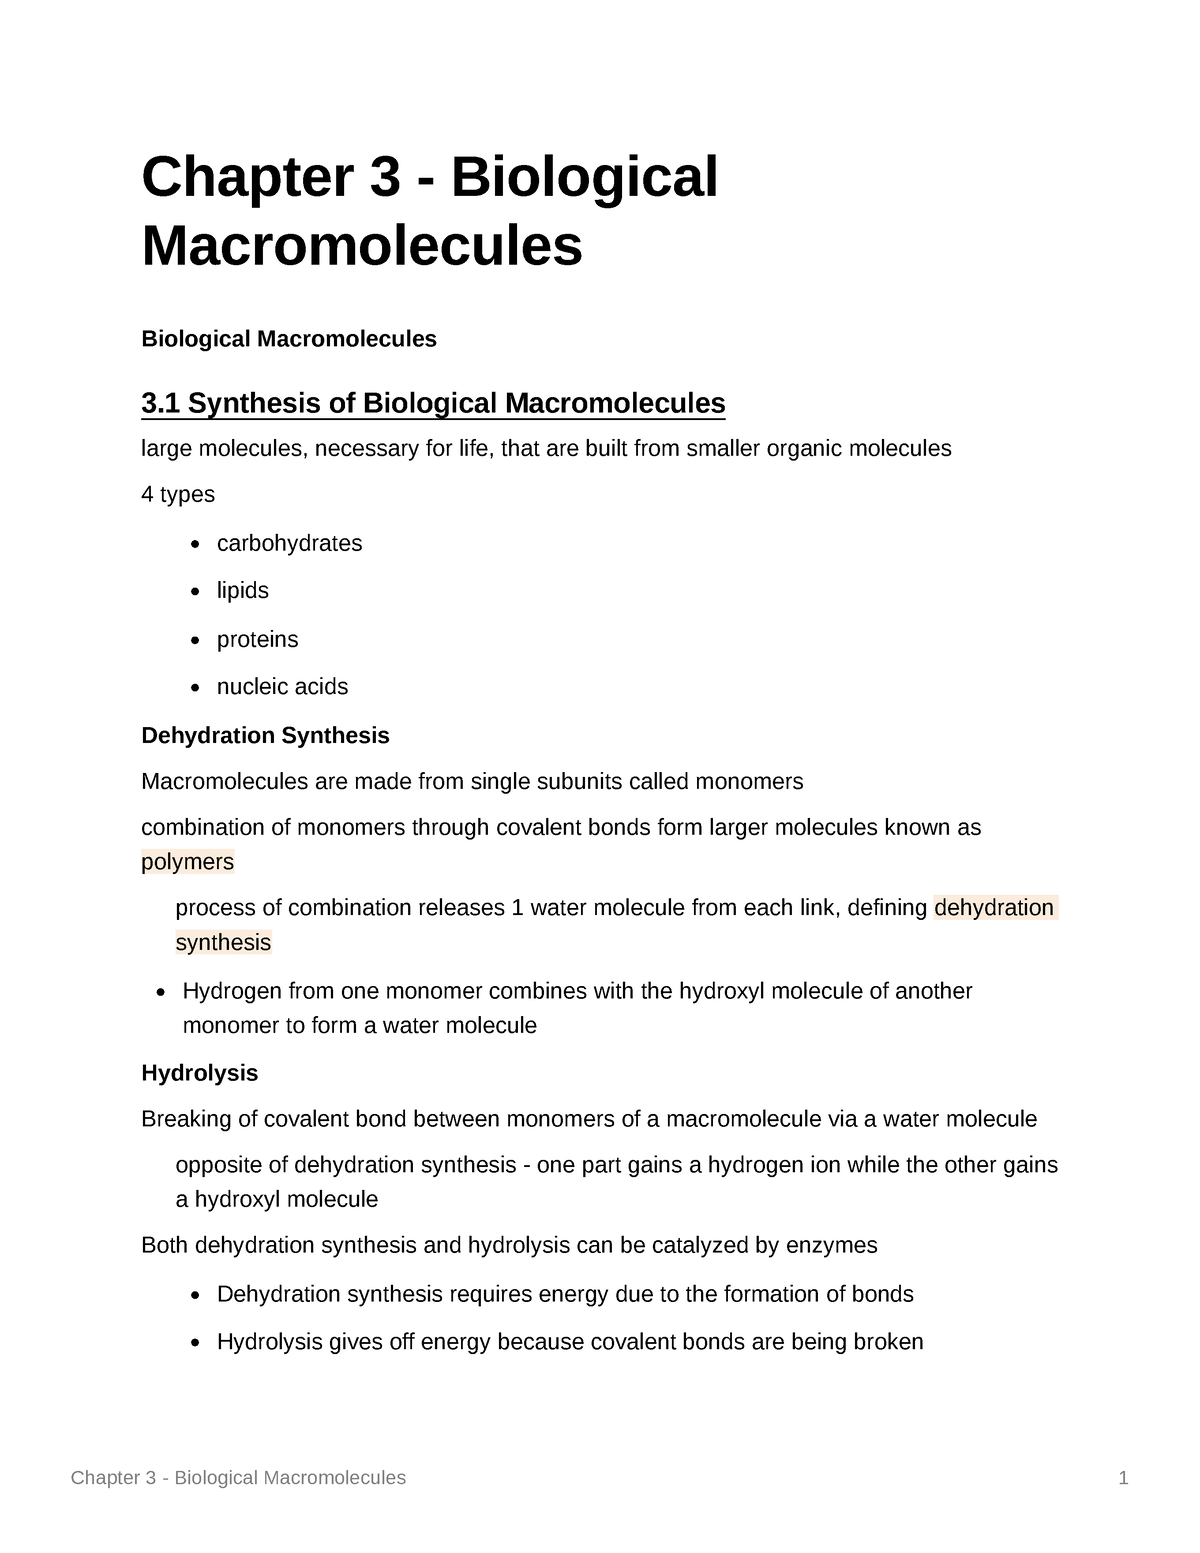 copy of macromolecules close reading assignment